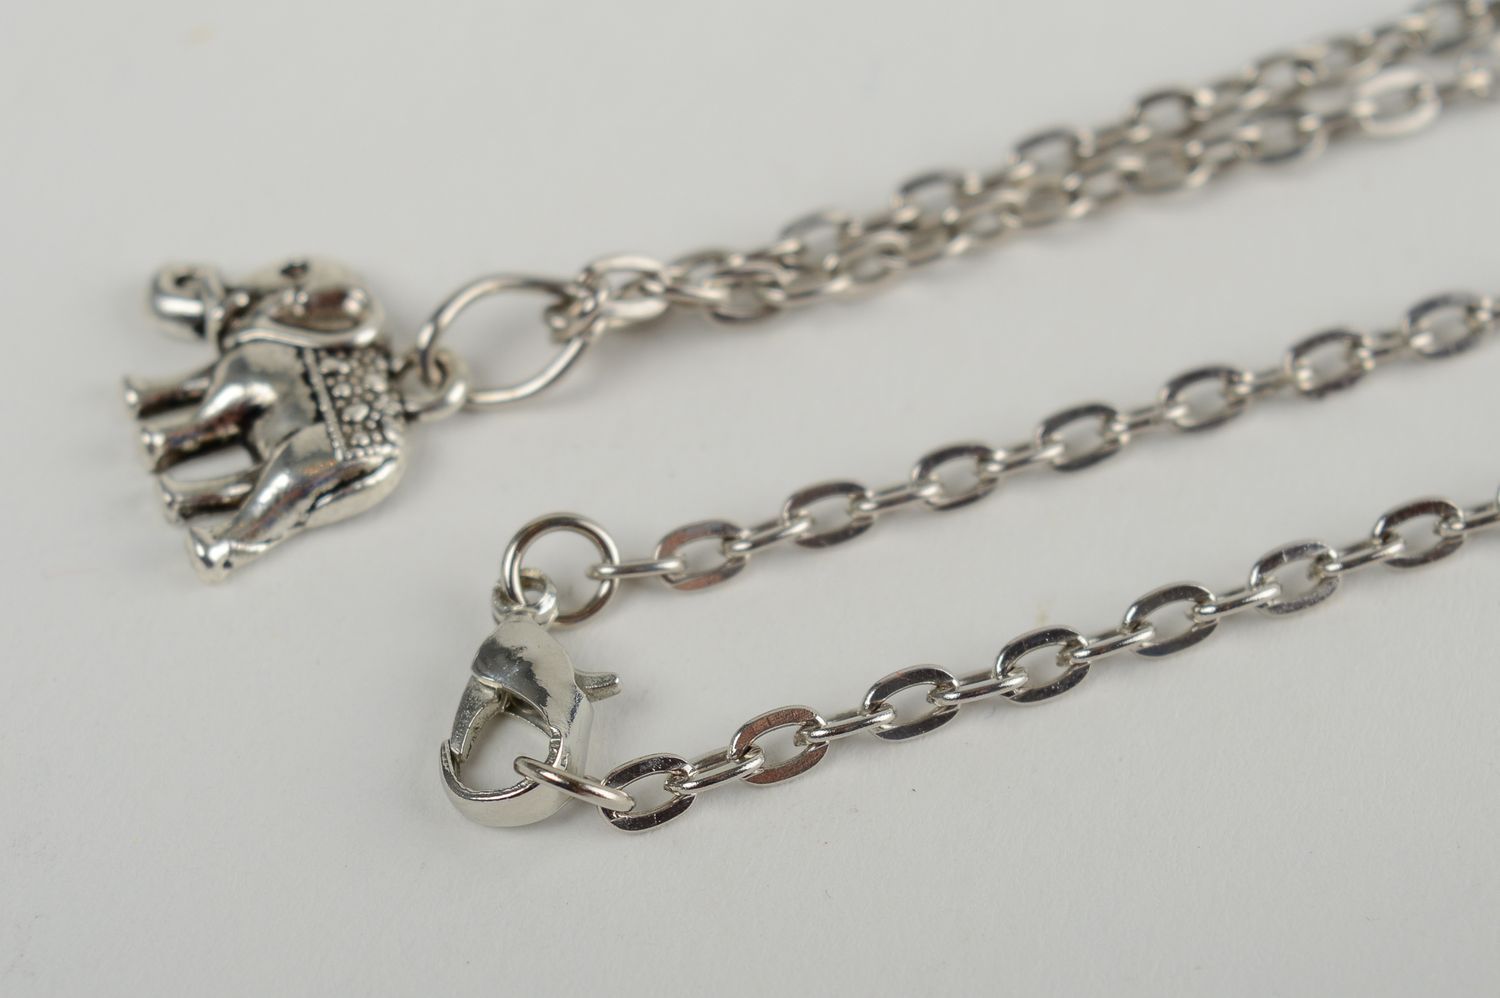 Handmade pendant little elephant metal pendant design accessories women gift photo 3